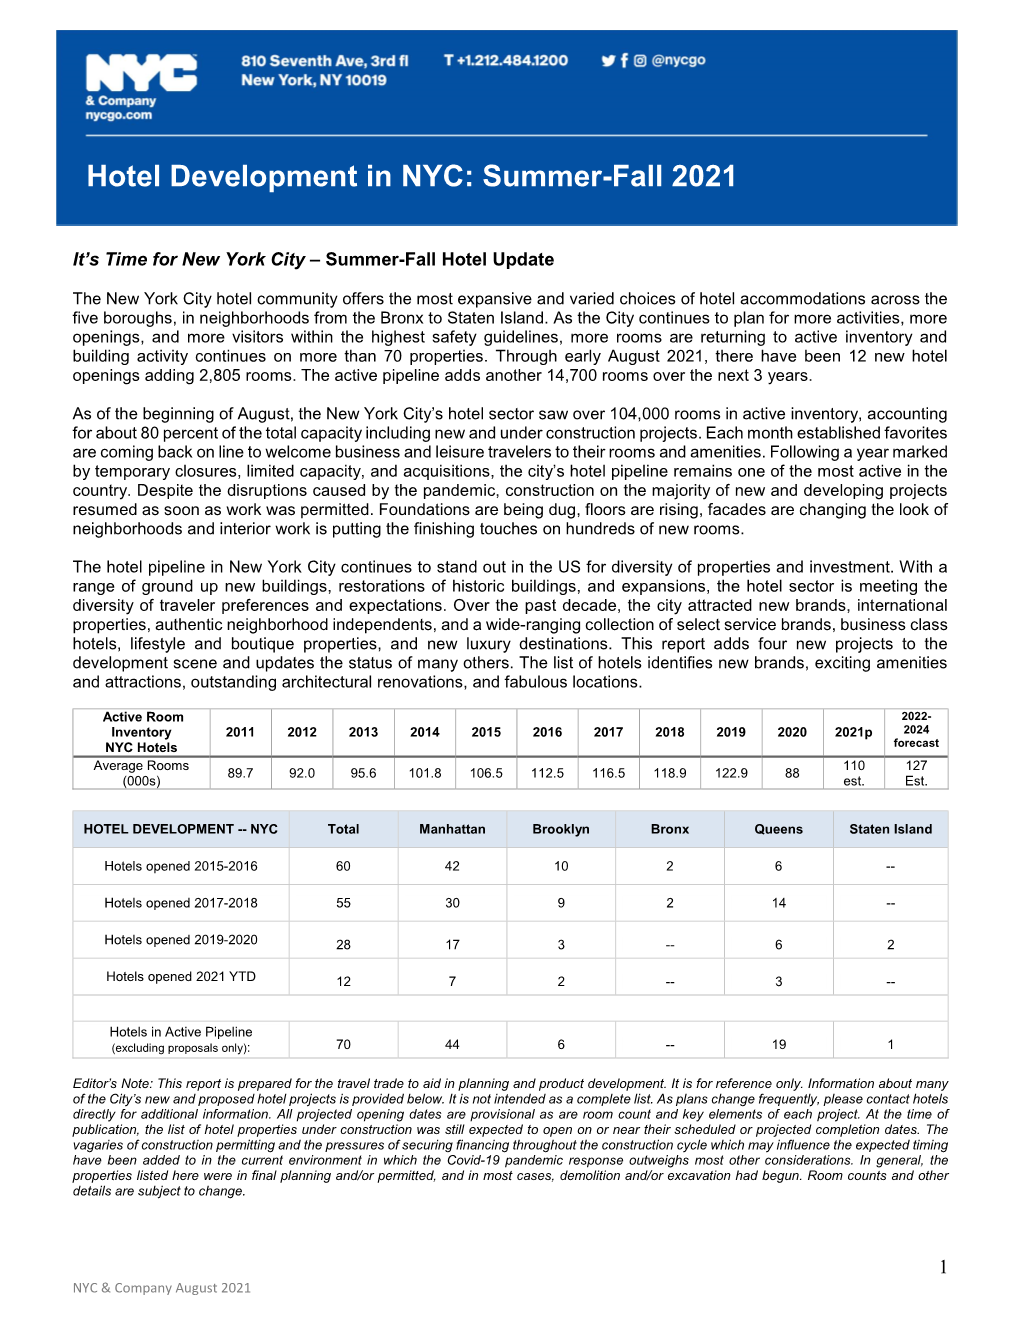 Hotel Development in NYC: Summer-Fall 2021